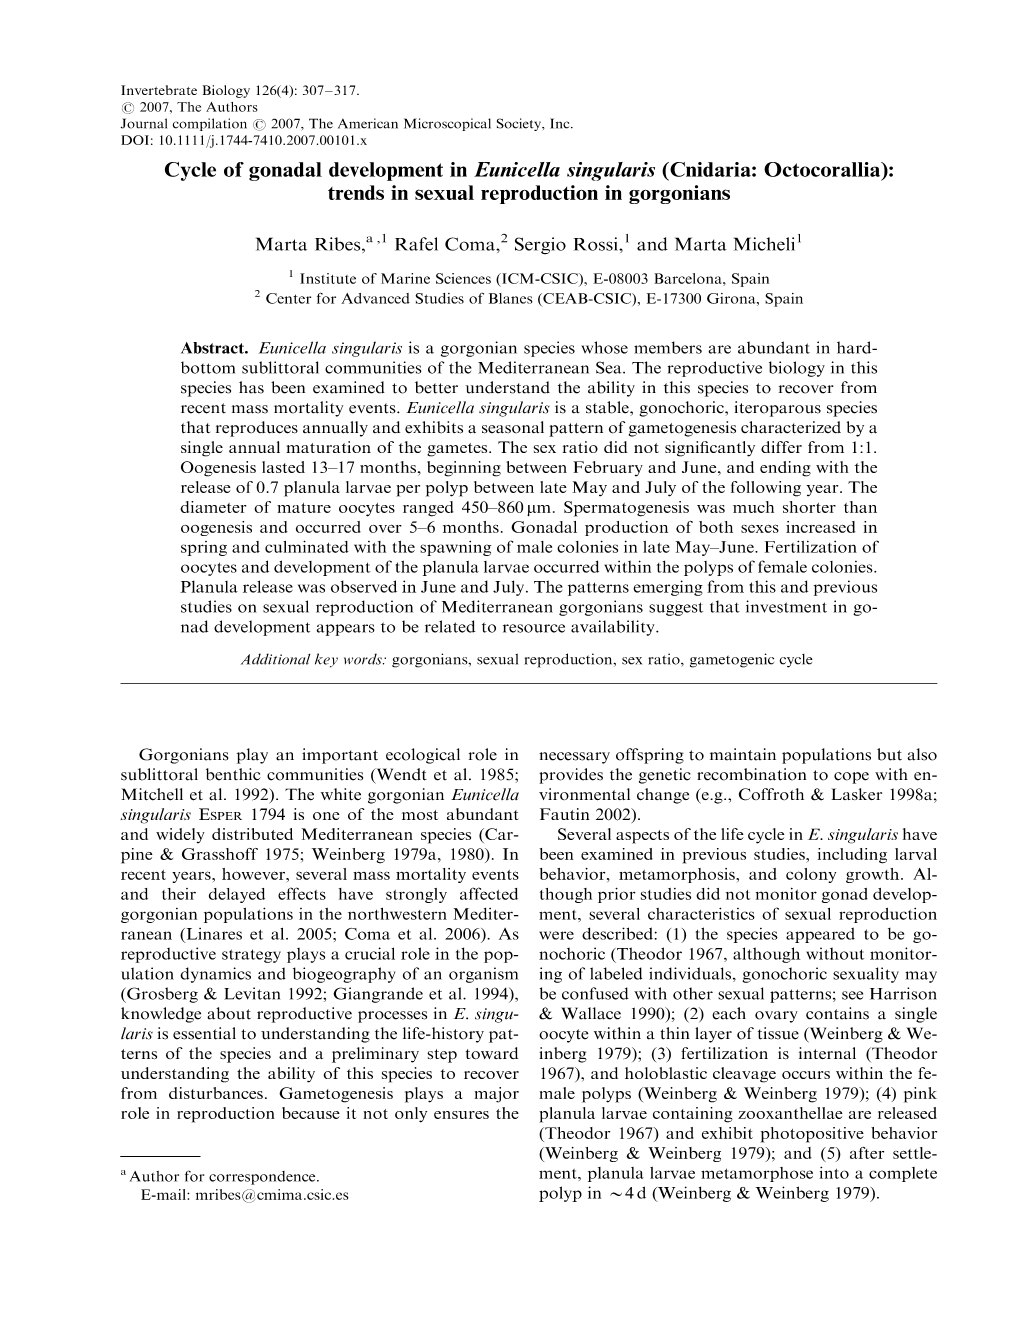 Cycle of Gonadal Development in Eunicella Singularis (Cnidaria: Octocorallia): Trends in Sexual Reproduction in Gorgonians